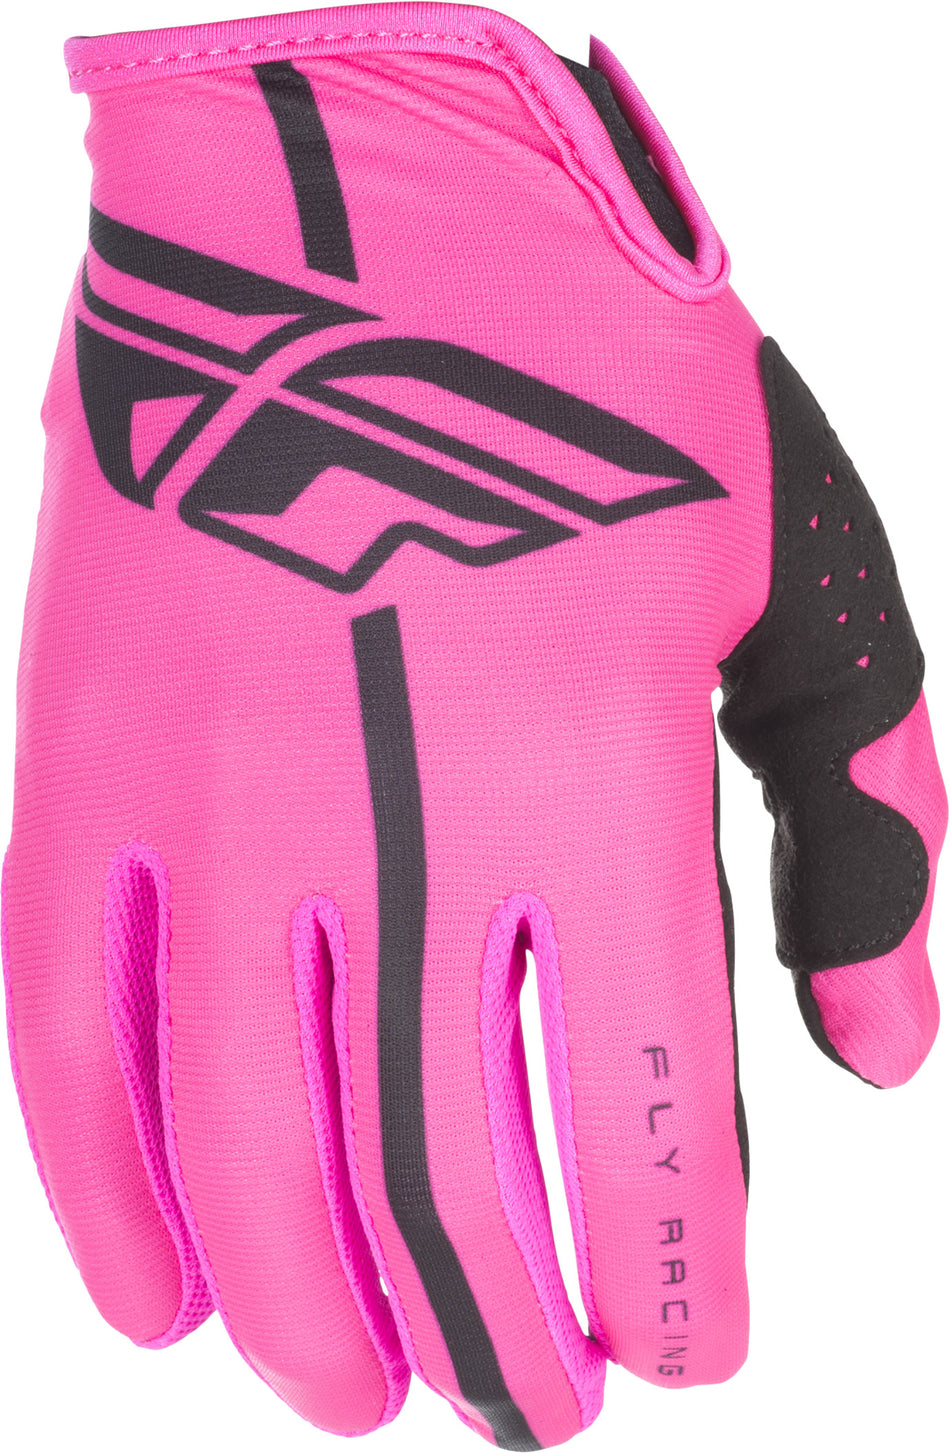 FLY RACING Lite Gloves Neon Pink/Black Sz 4 371-01904